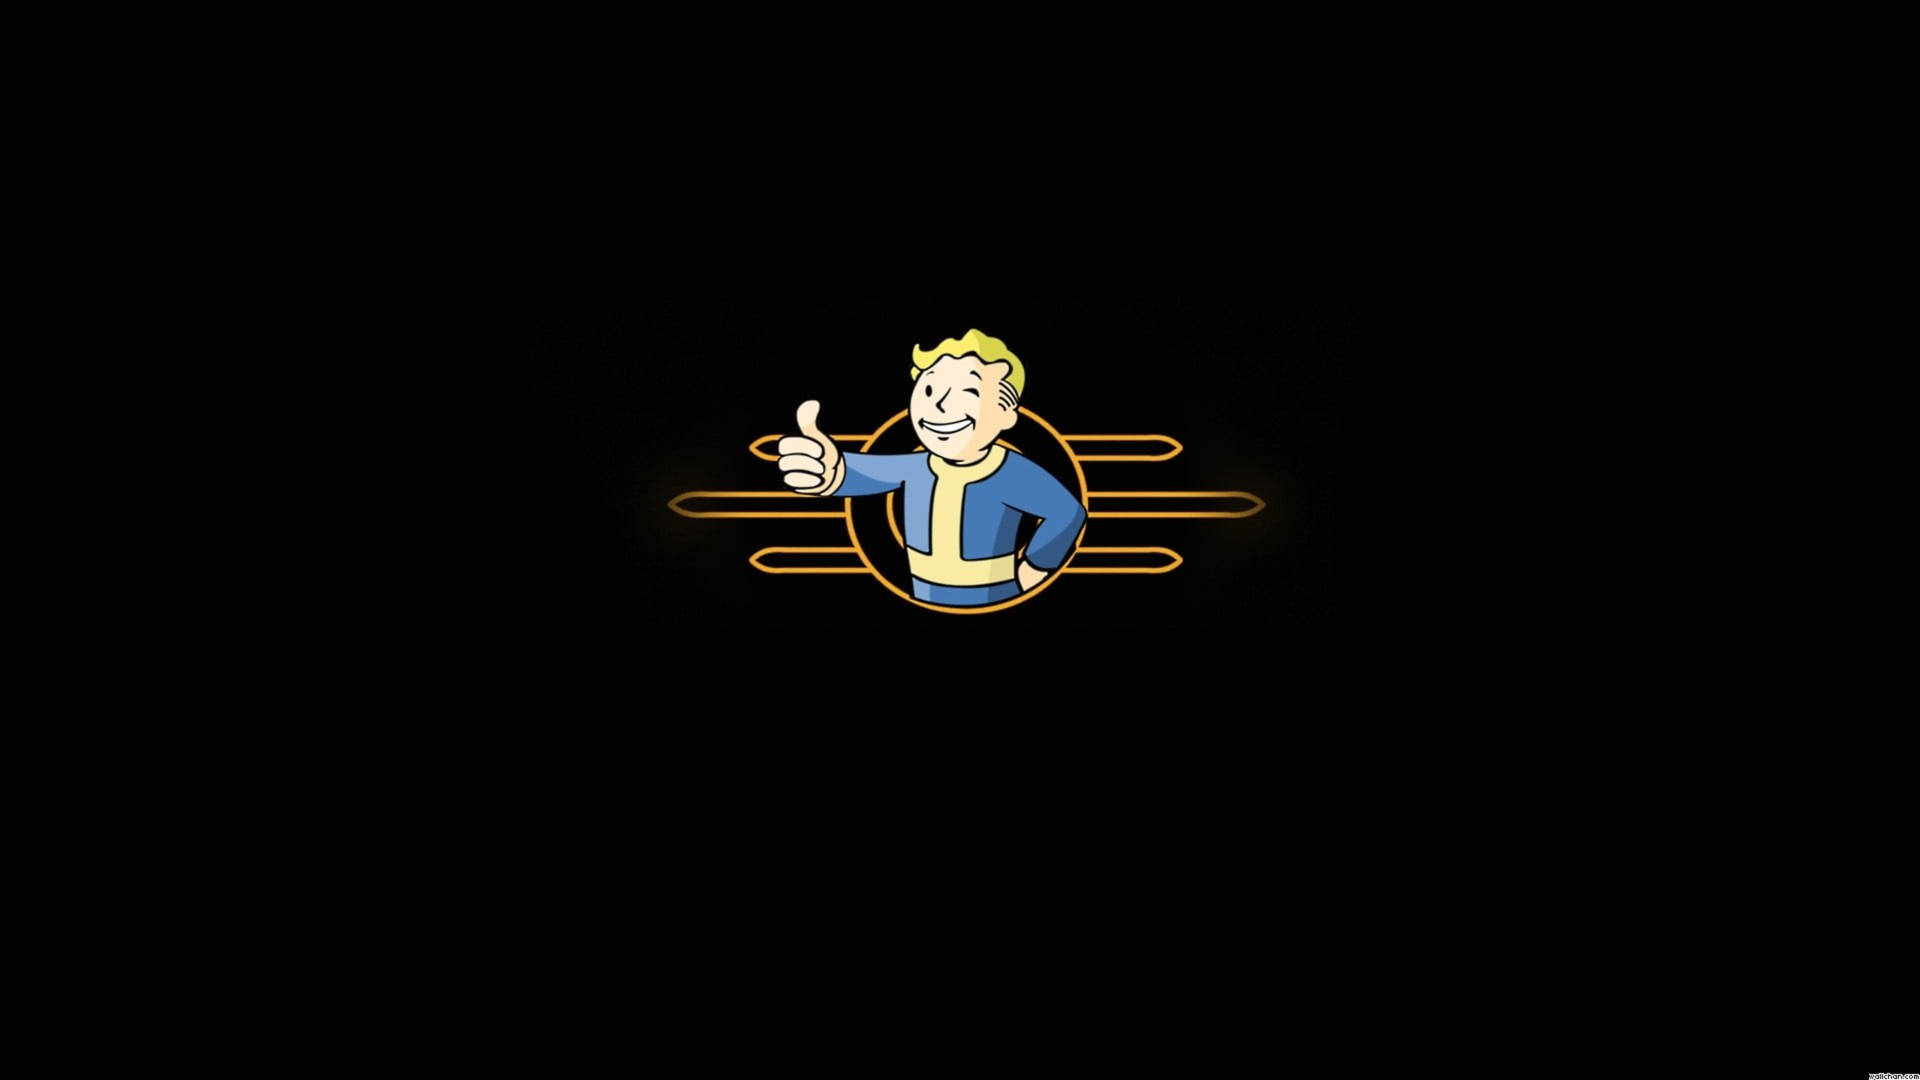 Fallout4 4k Vault Boy Minimalist - Fallout 4 4k Vault Boy Minimalistisch Wallpaper